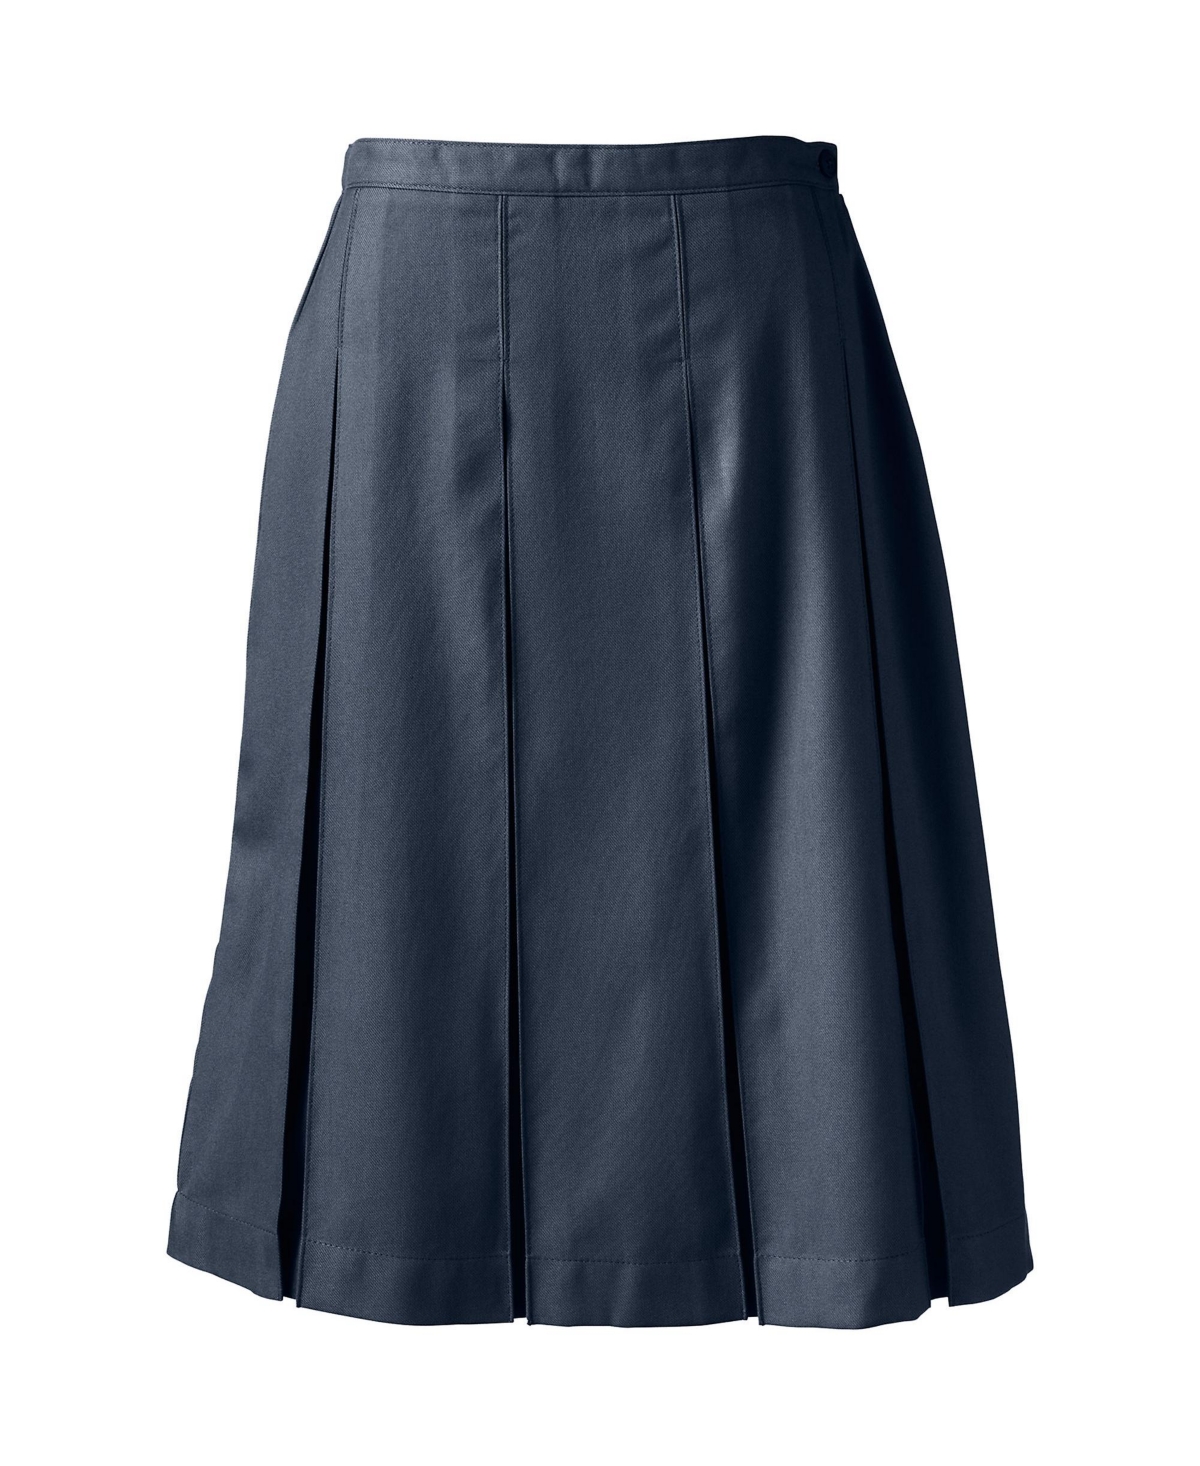 Women's School Uniform Box Pleat Skirt Below the Knee - Khaki